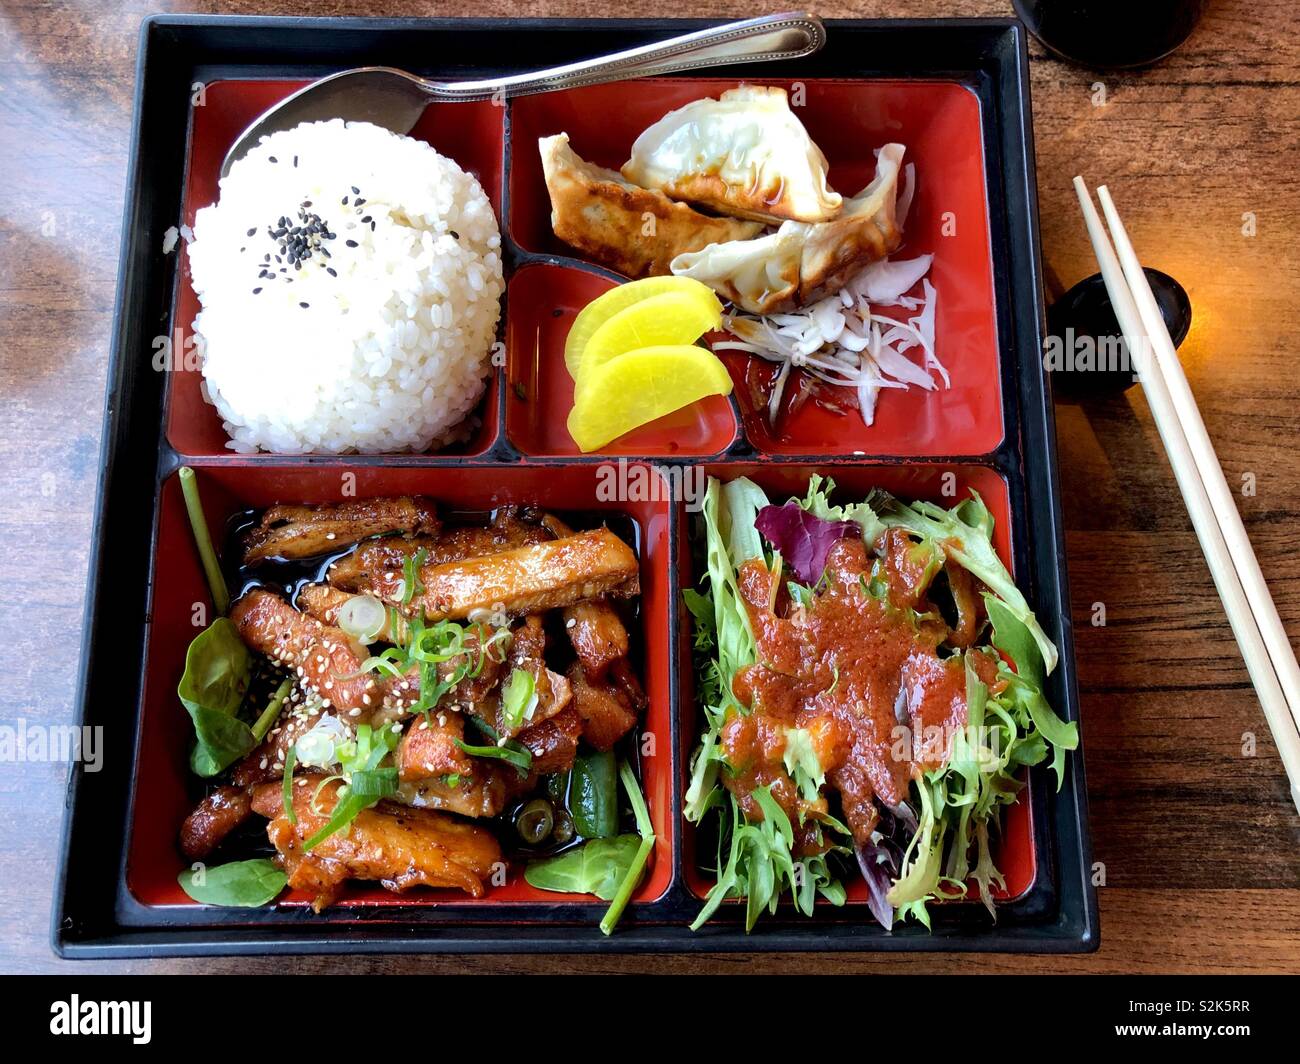 https://c8.alamy.com/comp/S2K5RR/a-good-lunch-a-japanese-bento-box-with-teriyaki-chicken-and-goyoza-dumplings-S2K5RR.jpg